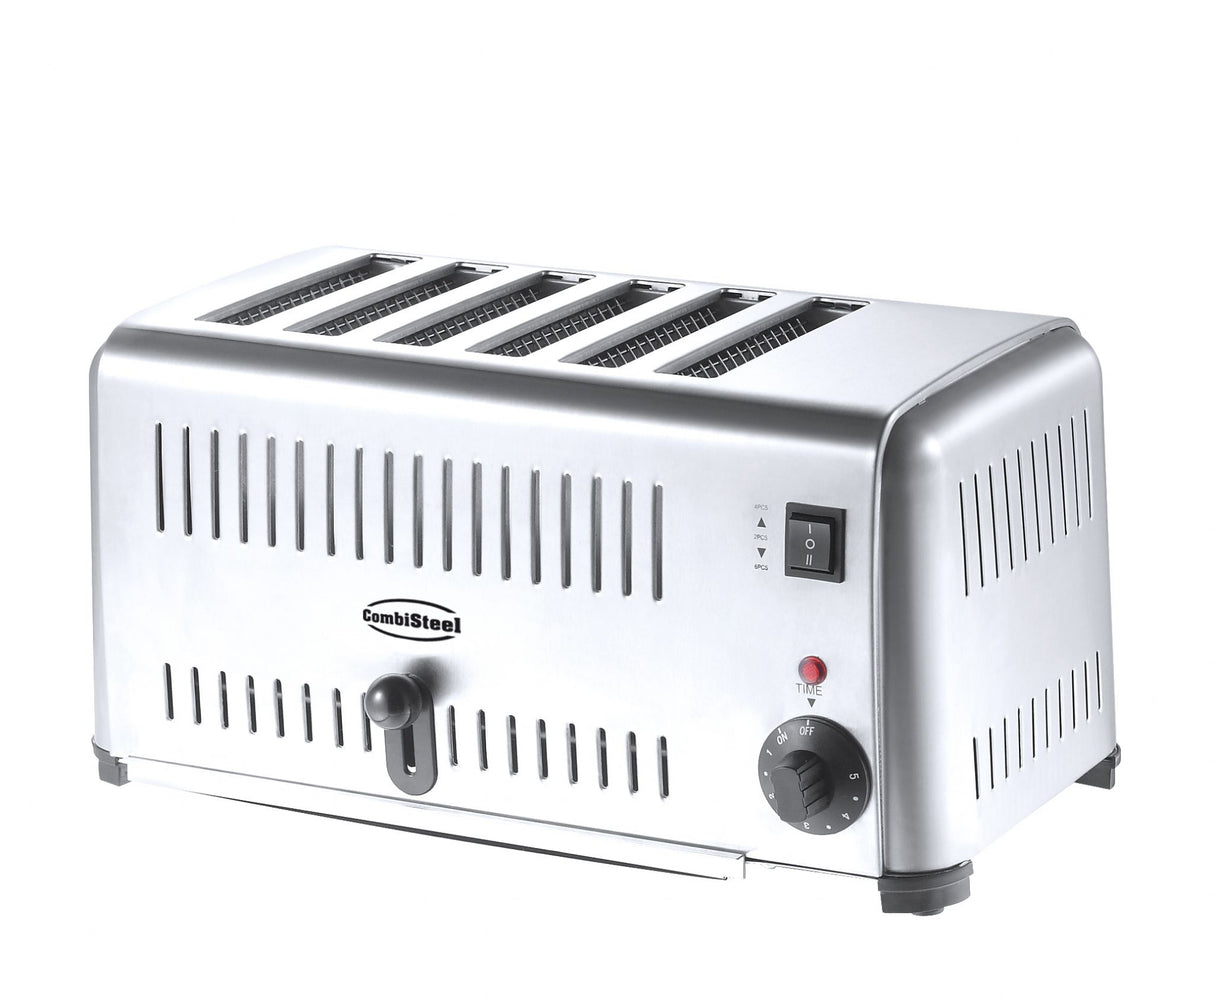 Combisteel Commercial Toaster 6 Slice - 7455.1640